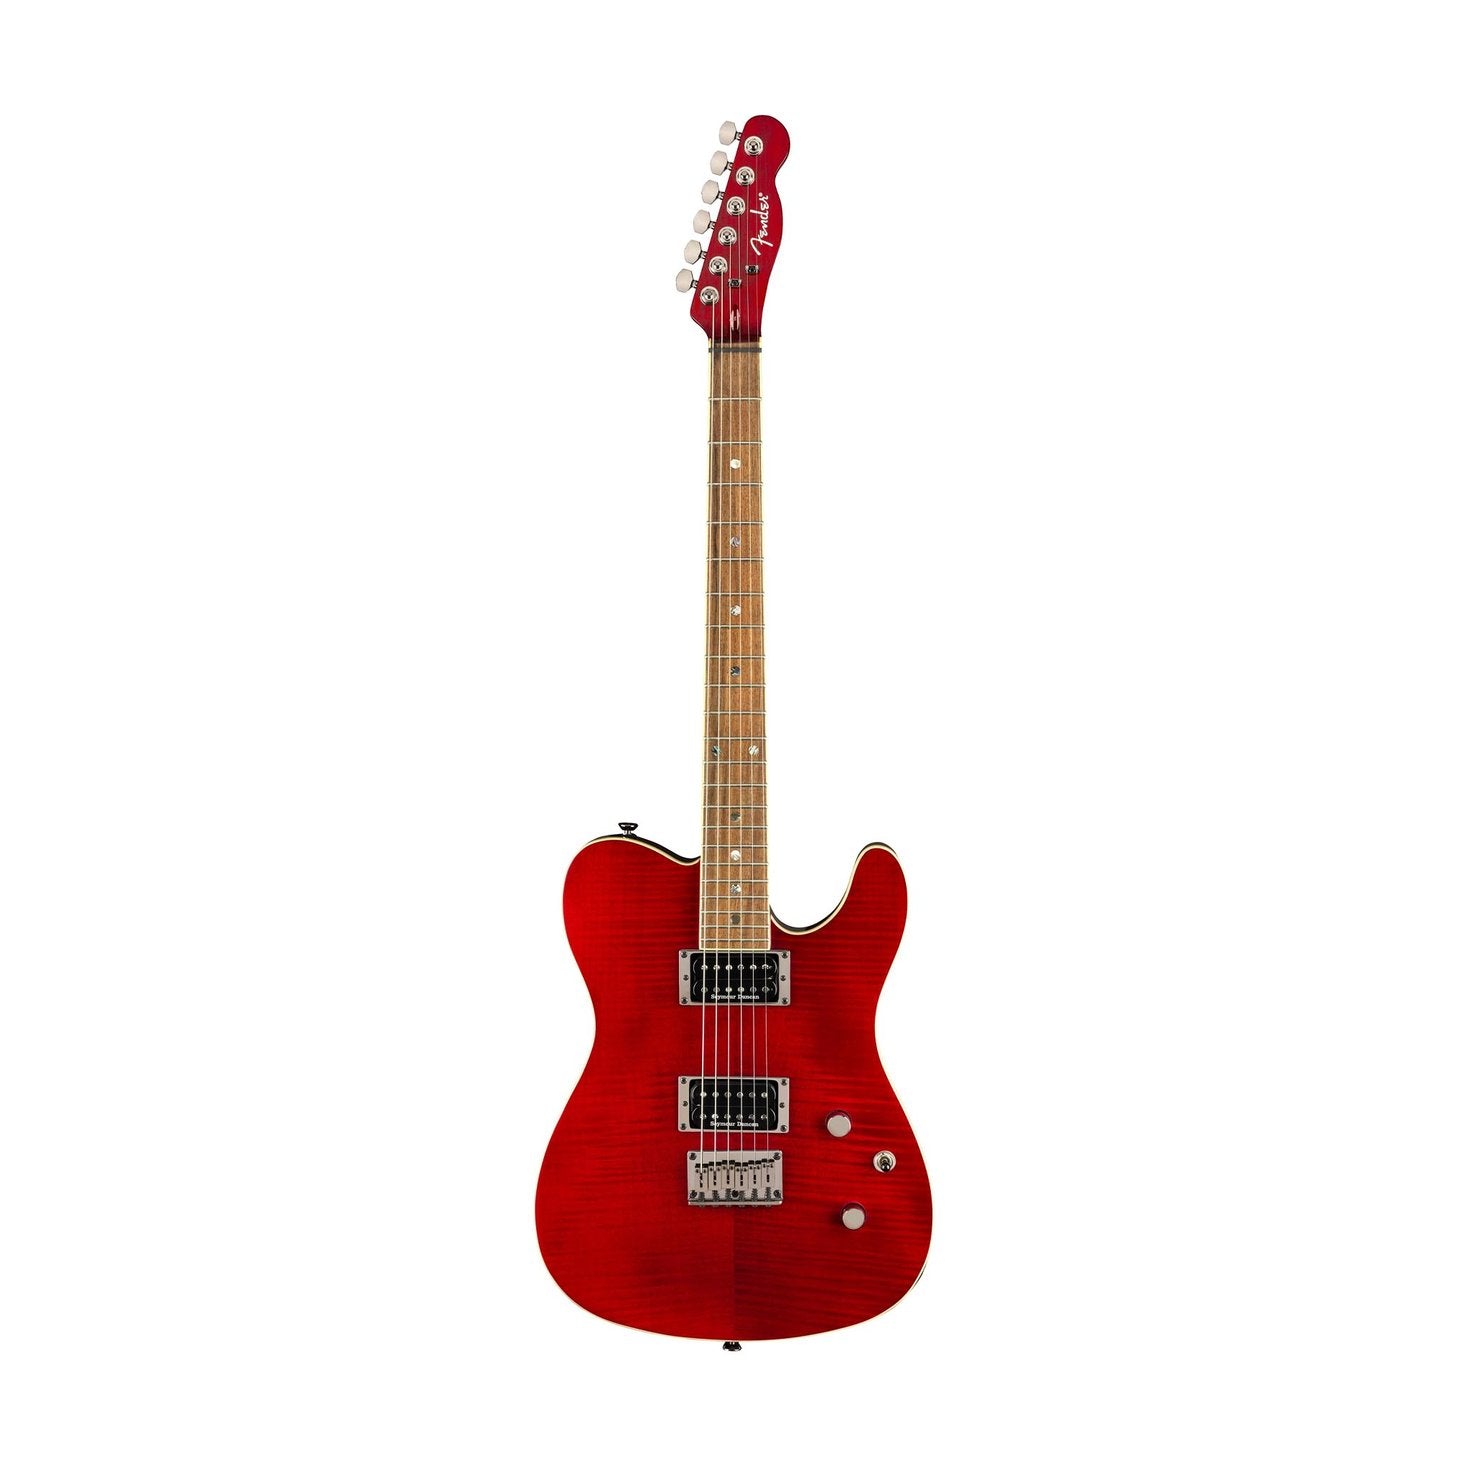 Fender Special Edition Custom Telecaster FMT HH Electric Guitar, Crimson Red, FENDER, ELECTRIC GUITAR, fender-eletric-guitar-f03-026-2004-538, ZOSO MUSIC SDN BHD